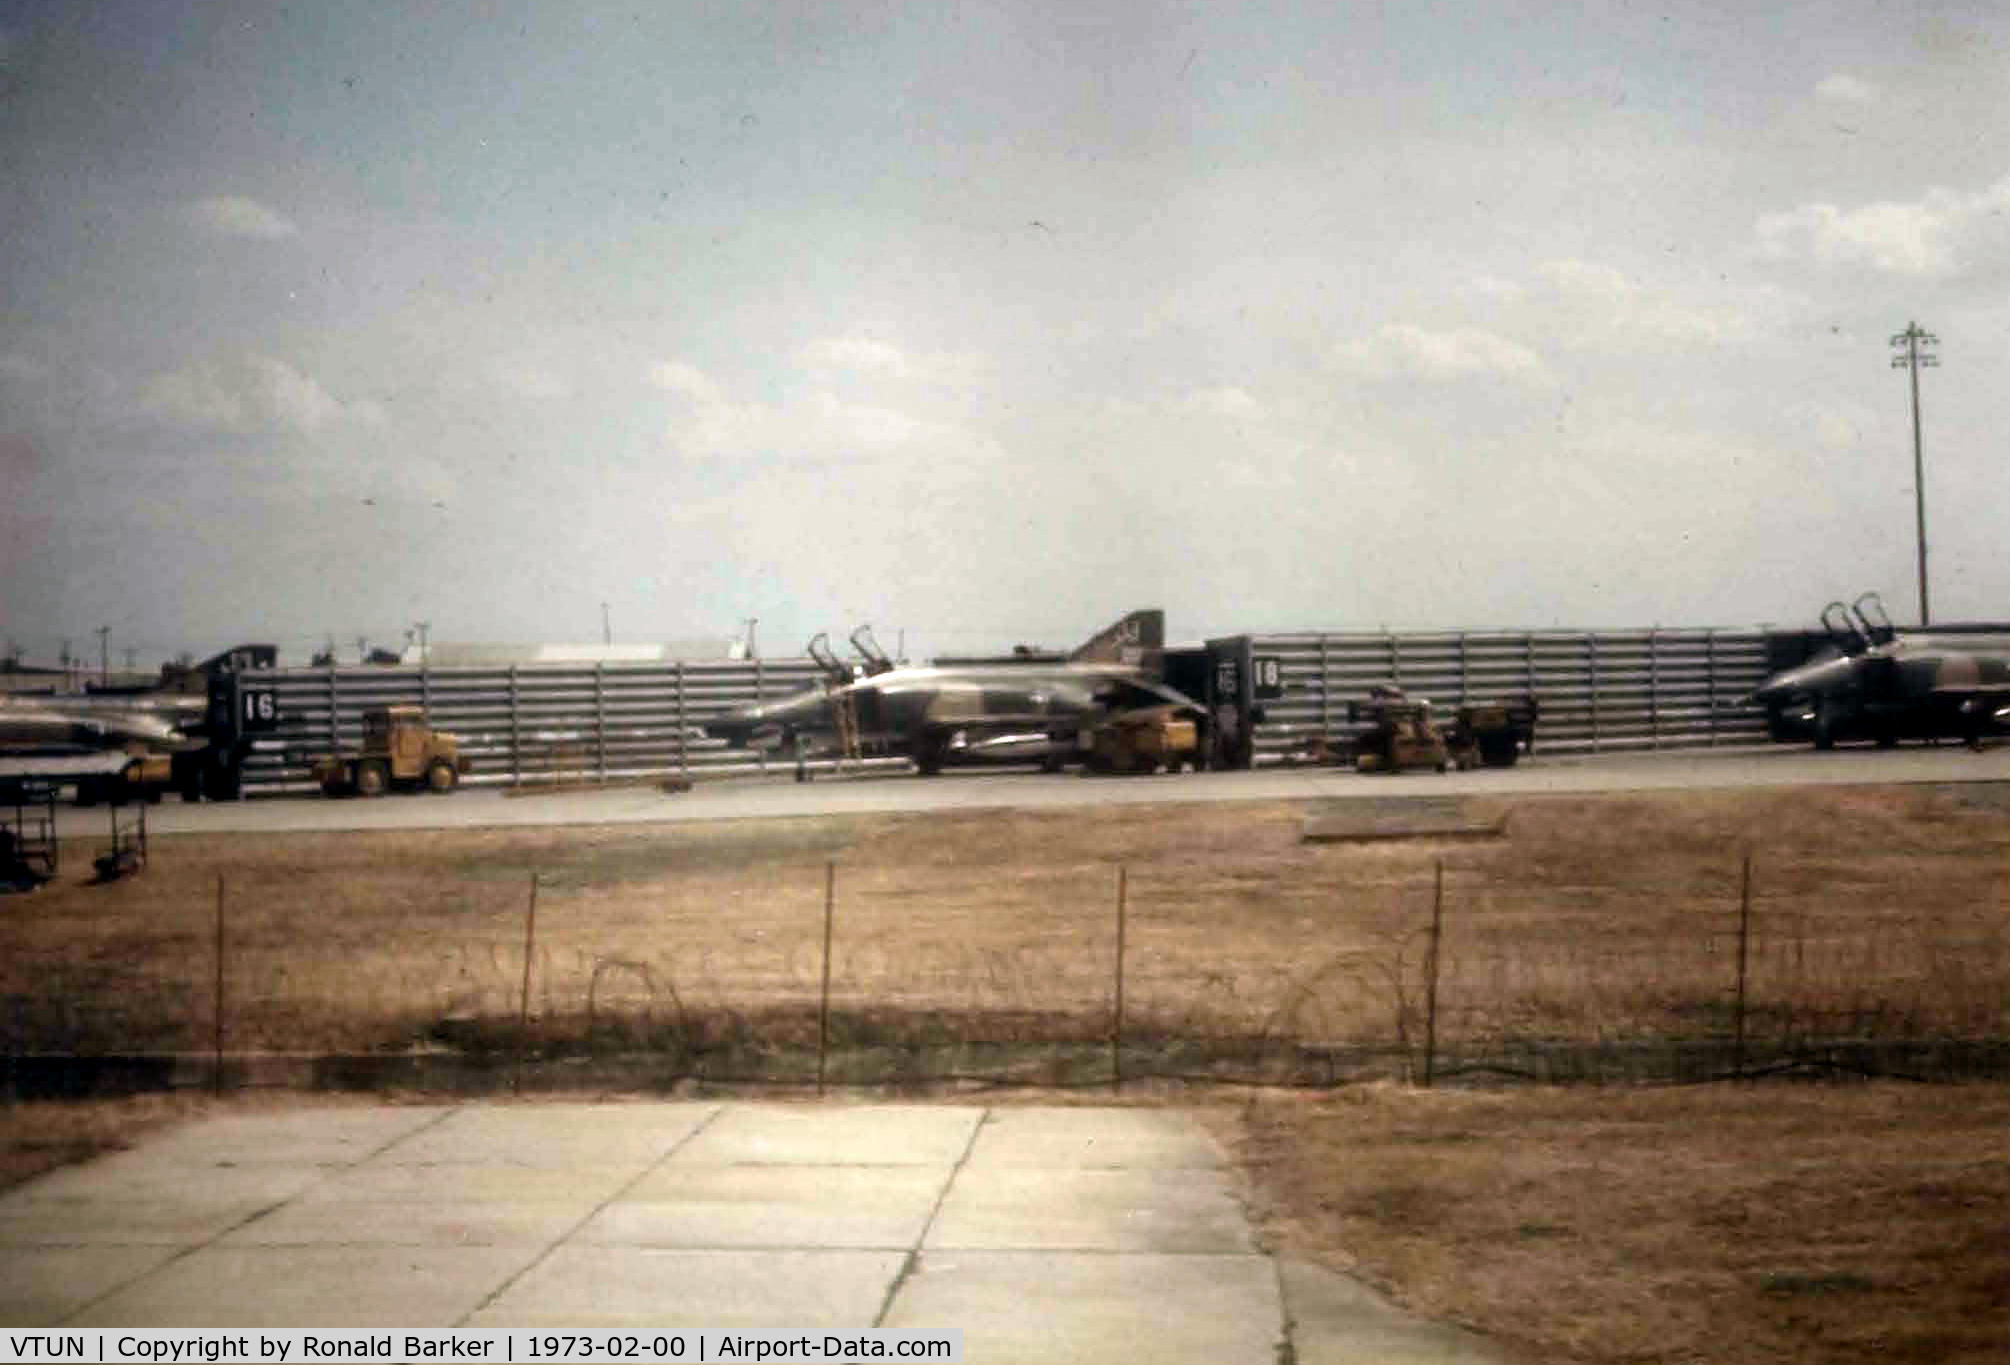 Khorat Air Force Base Airport, Nakhon Ratchasima (Khorat) Thailand (VTUN) - F-4E Korat Feb 1973